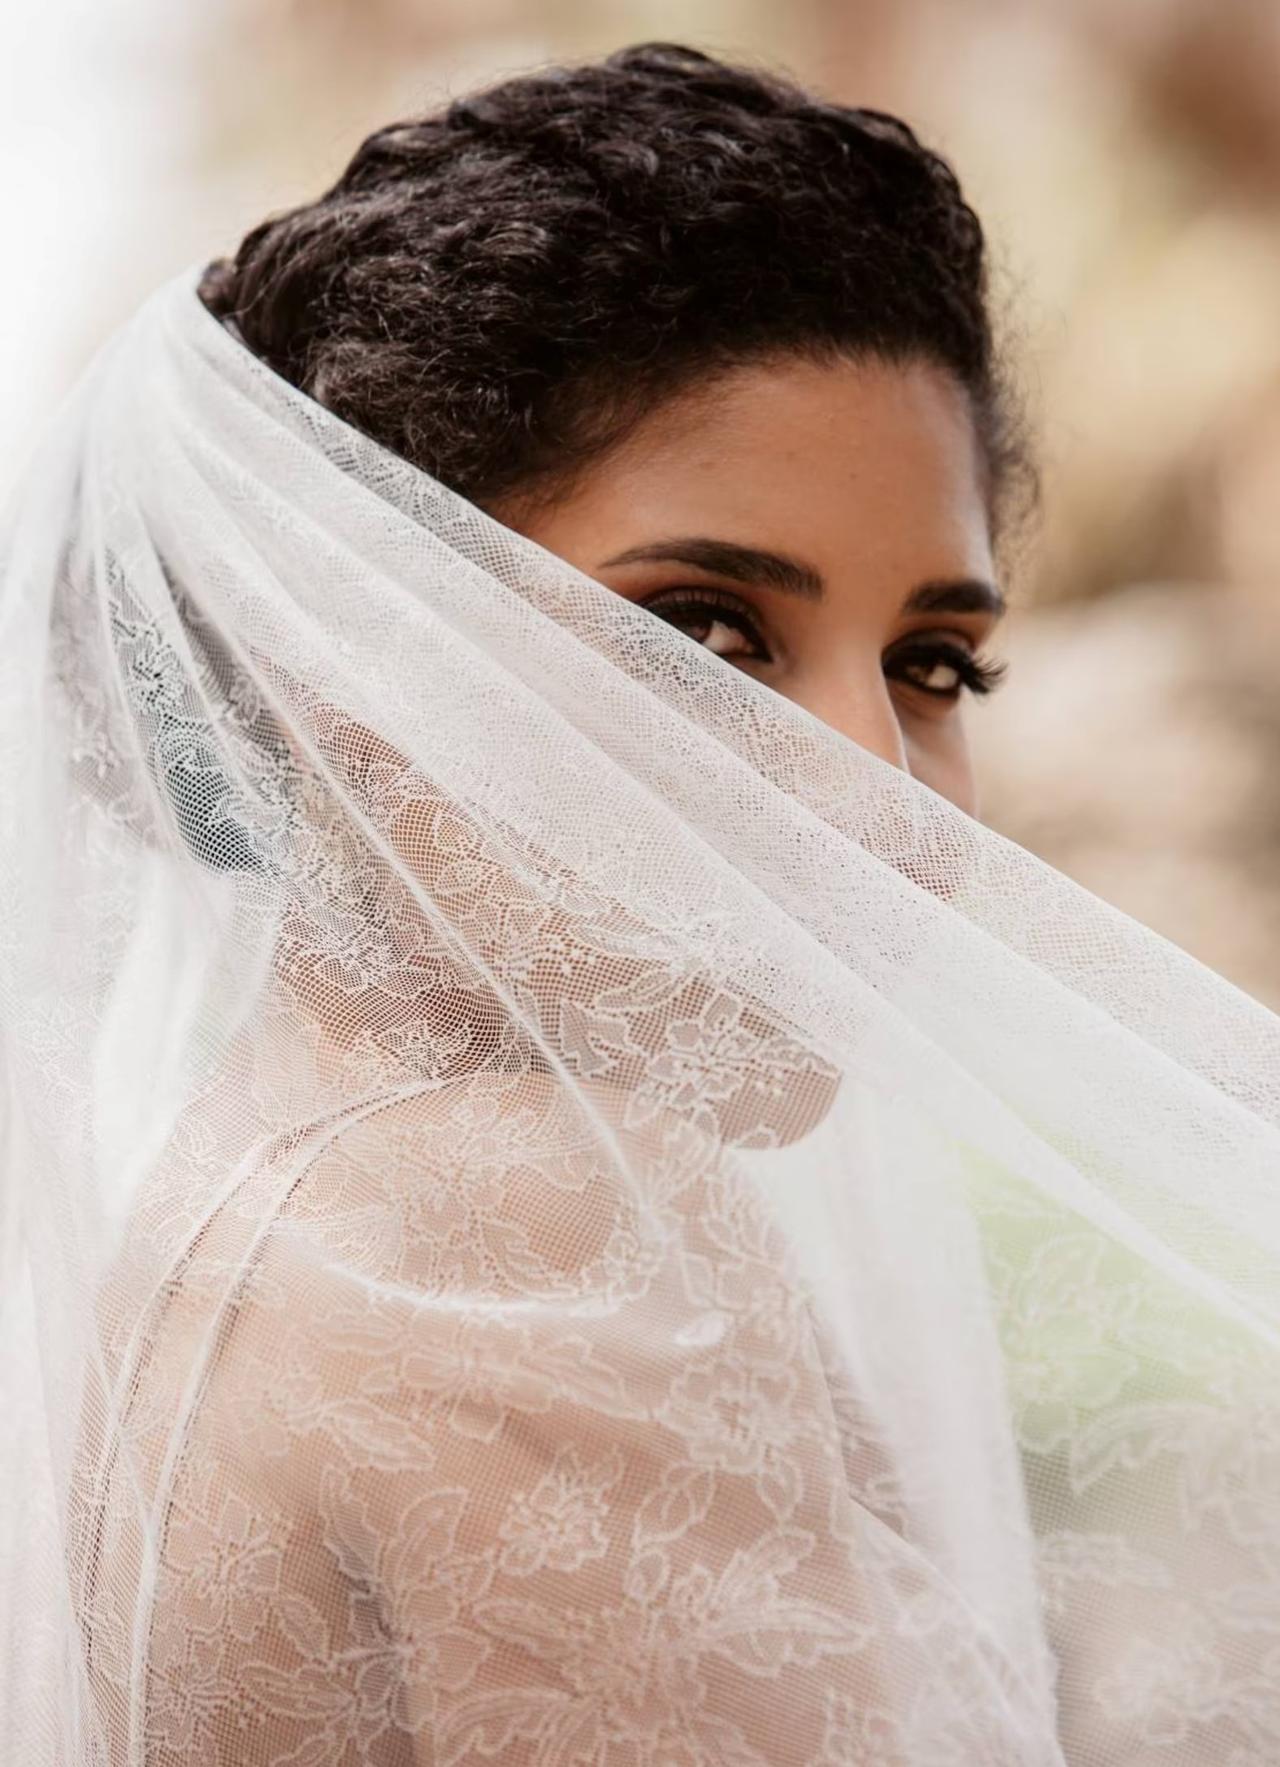 https://cdn0.hitched.co.uk/article/4320/original/1280/jpg/120234-lace-wedding-veil.jpeg